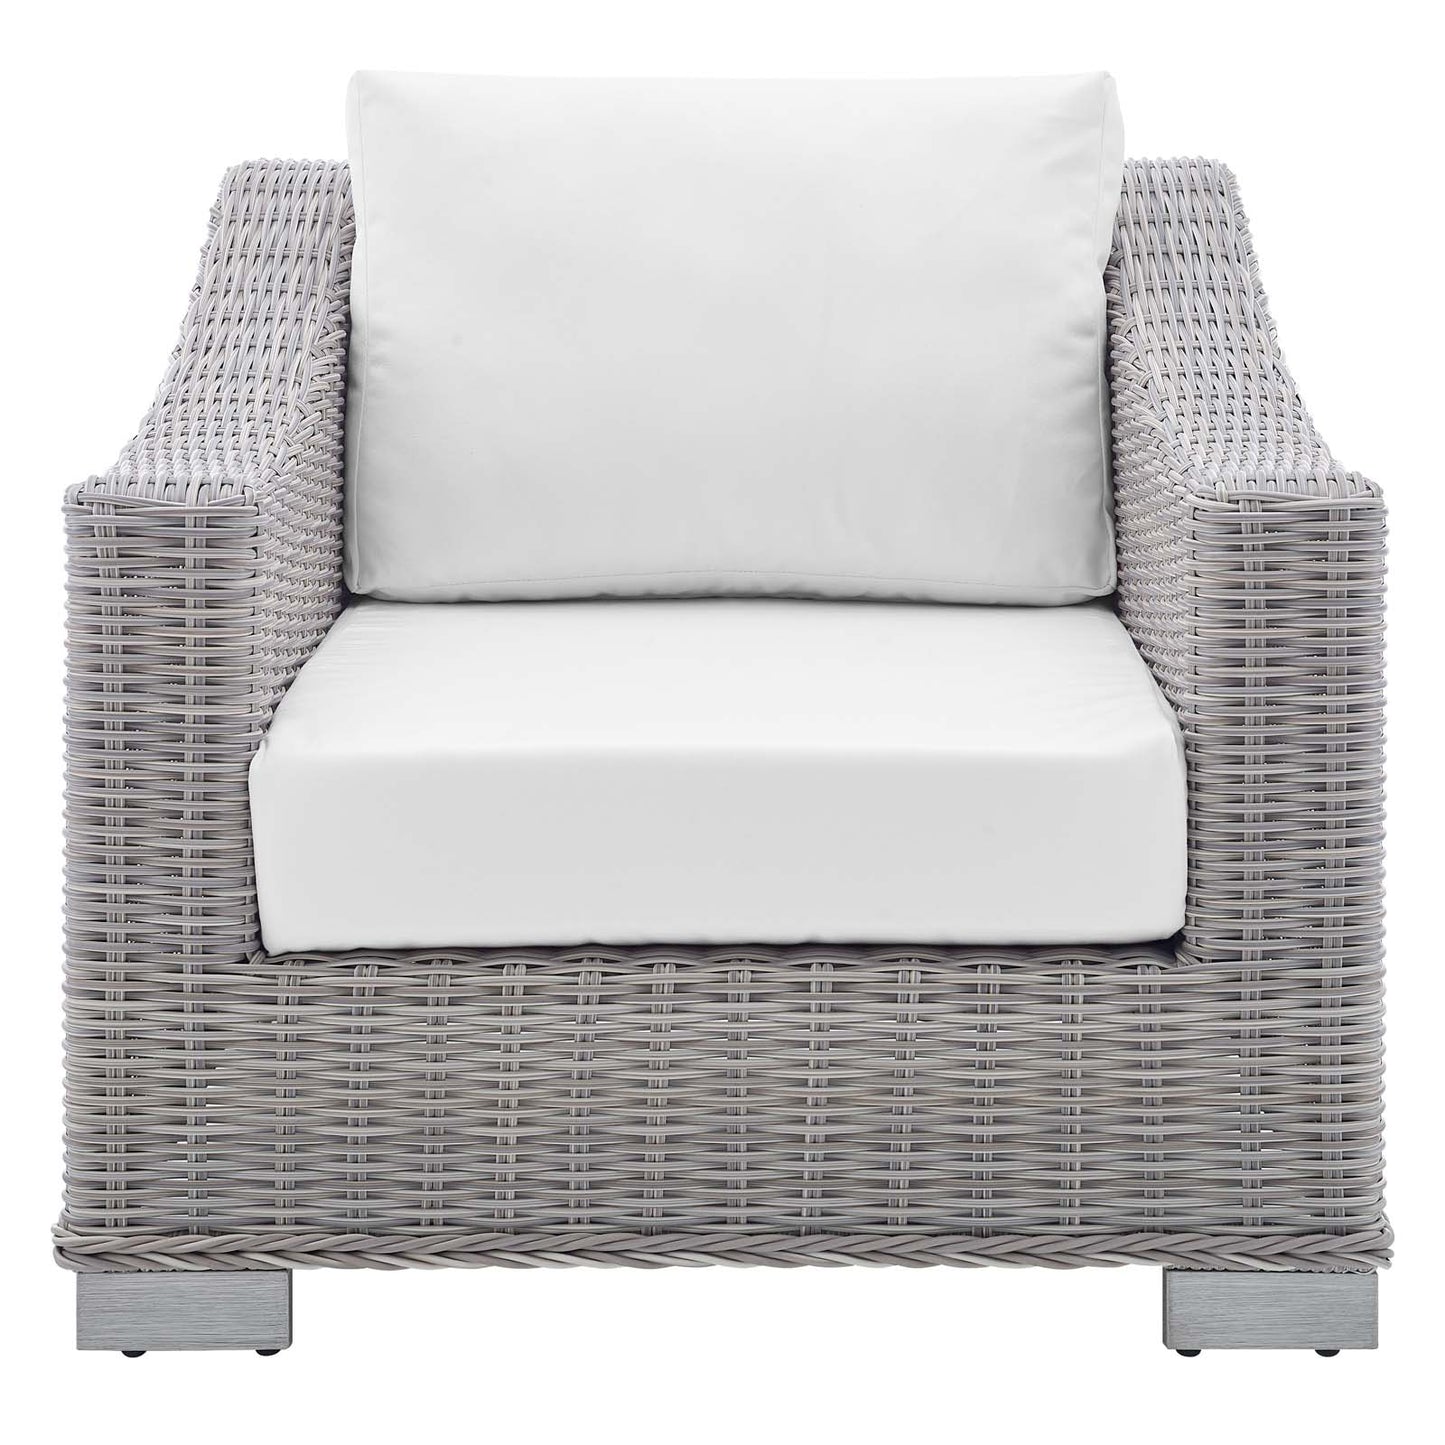 Conway Sunbrella® Outdoor Patio Wicker Rattan Armchair Light Gray White EEI-3972-LGR-WHI